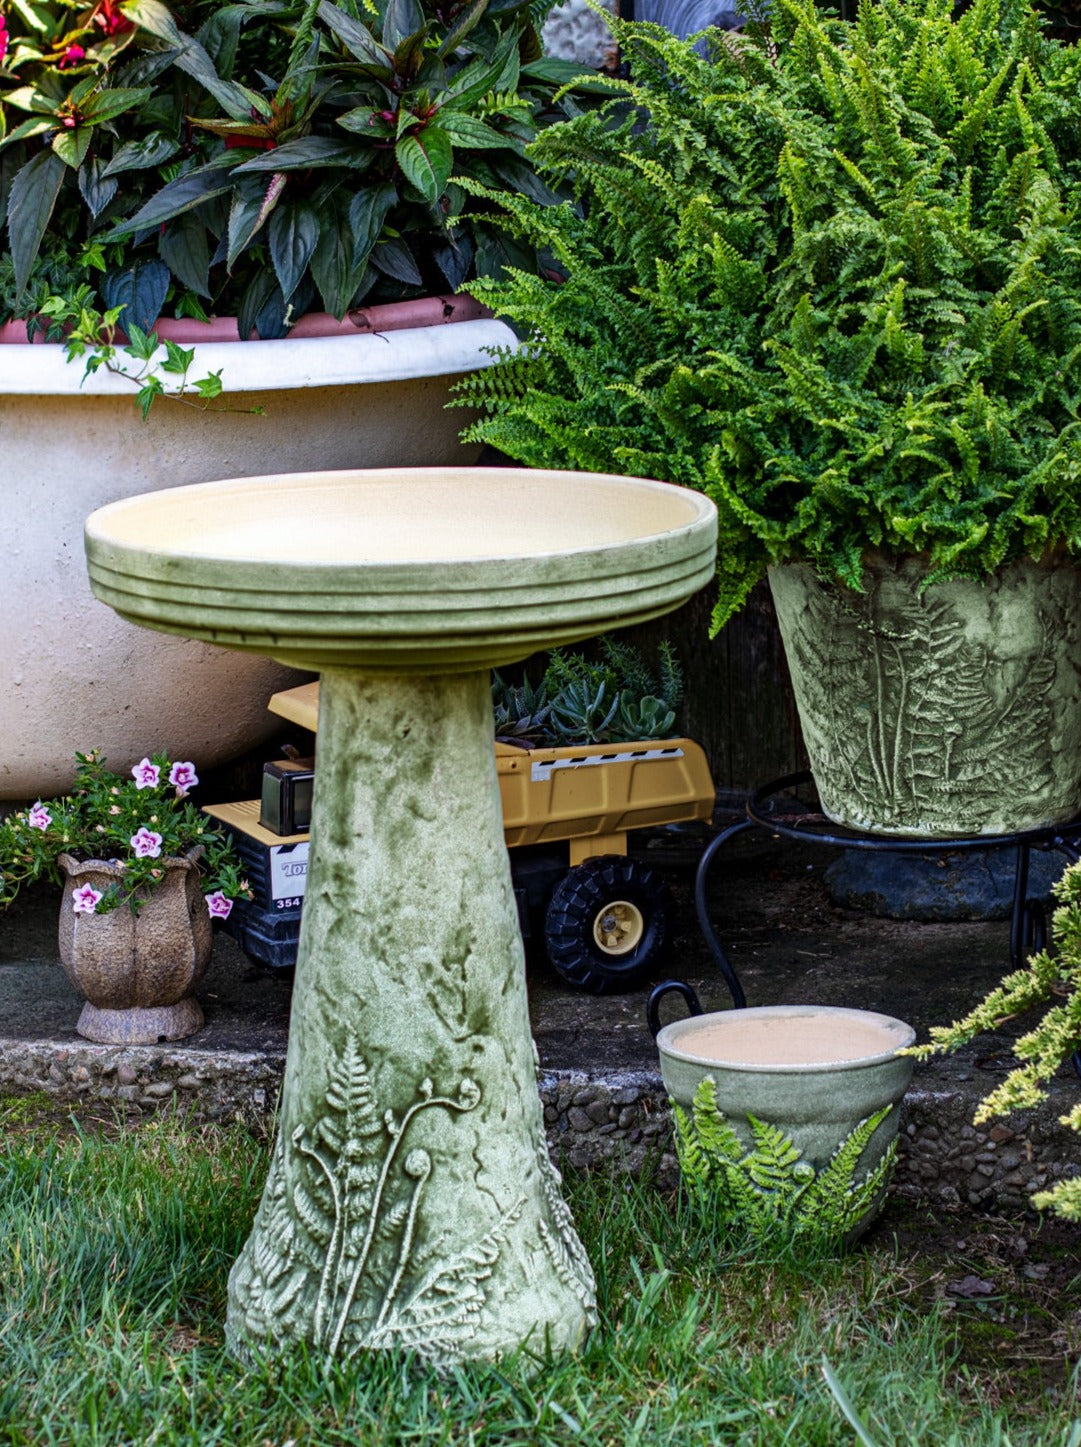 ceramic birdbath set with hand aged Fern design in landscaped garden area with fern planters